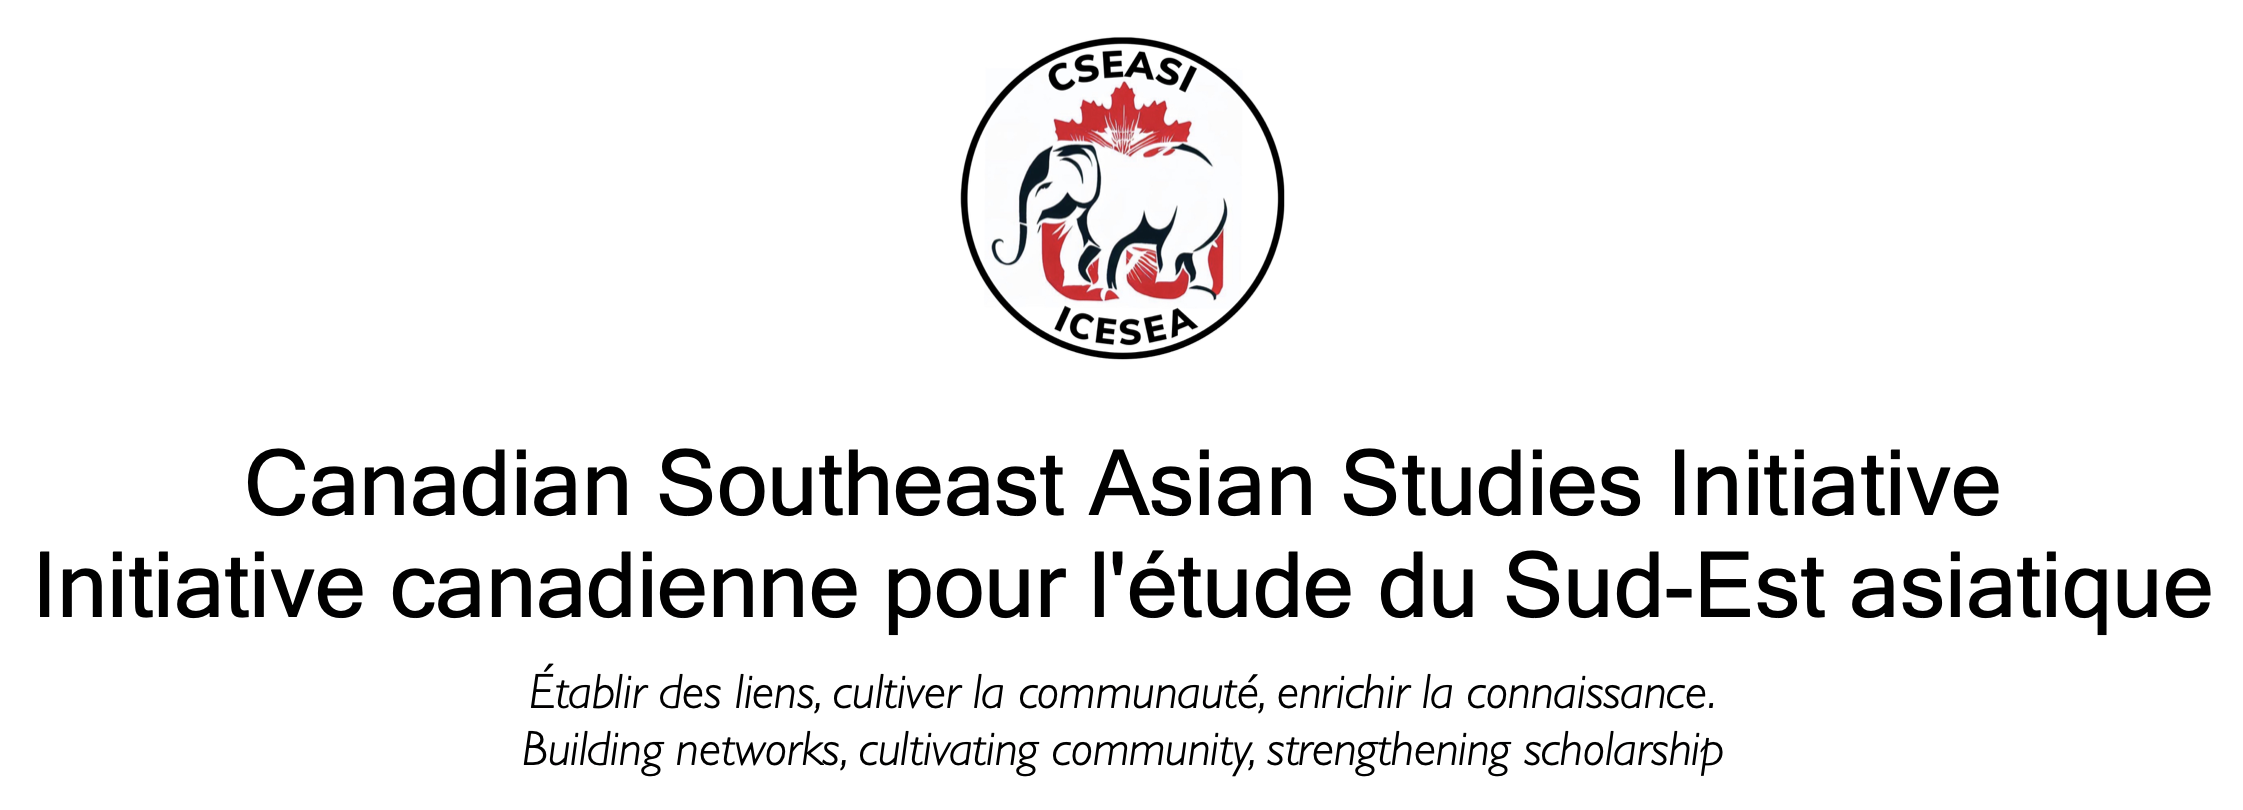 Canadian Southeast Asian Studies Initiative